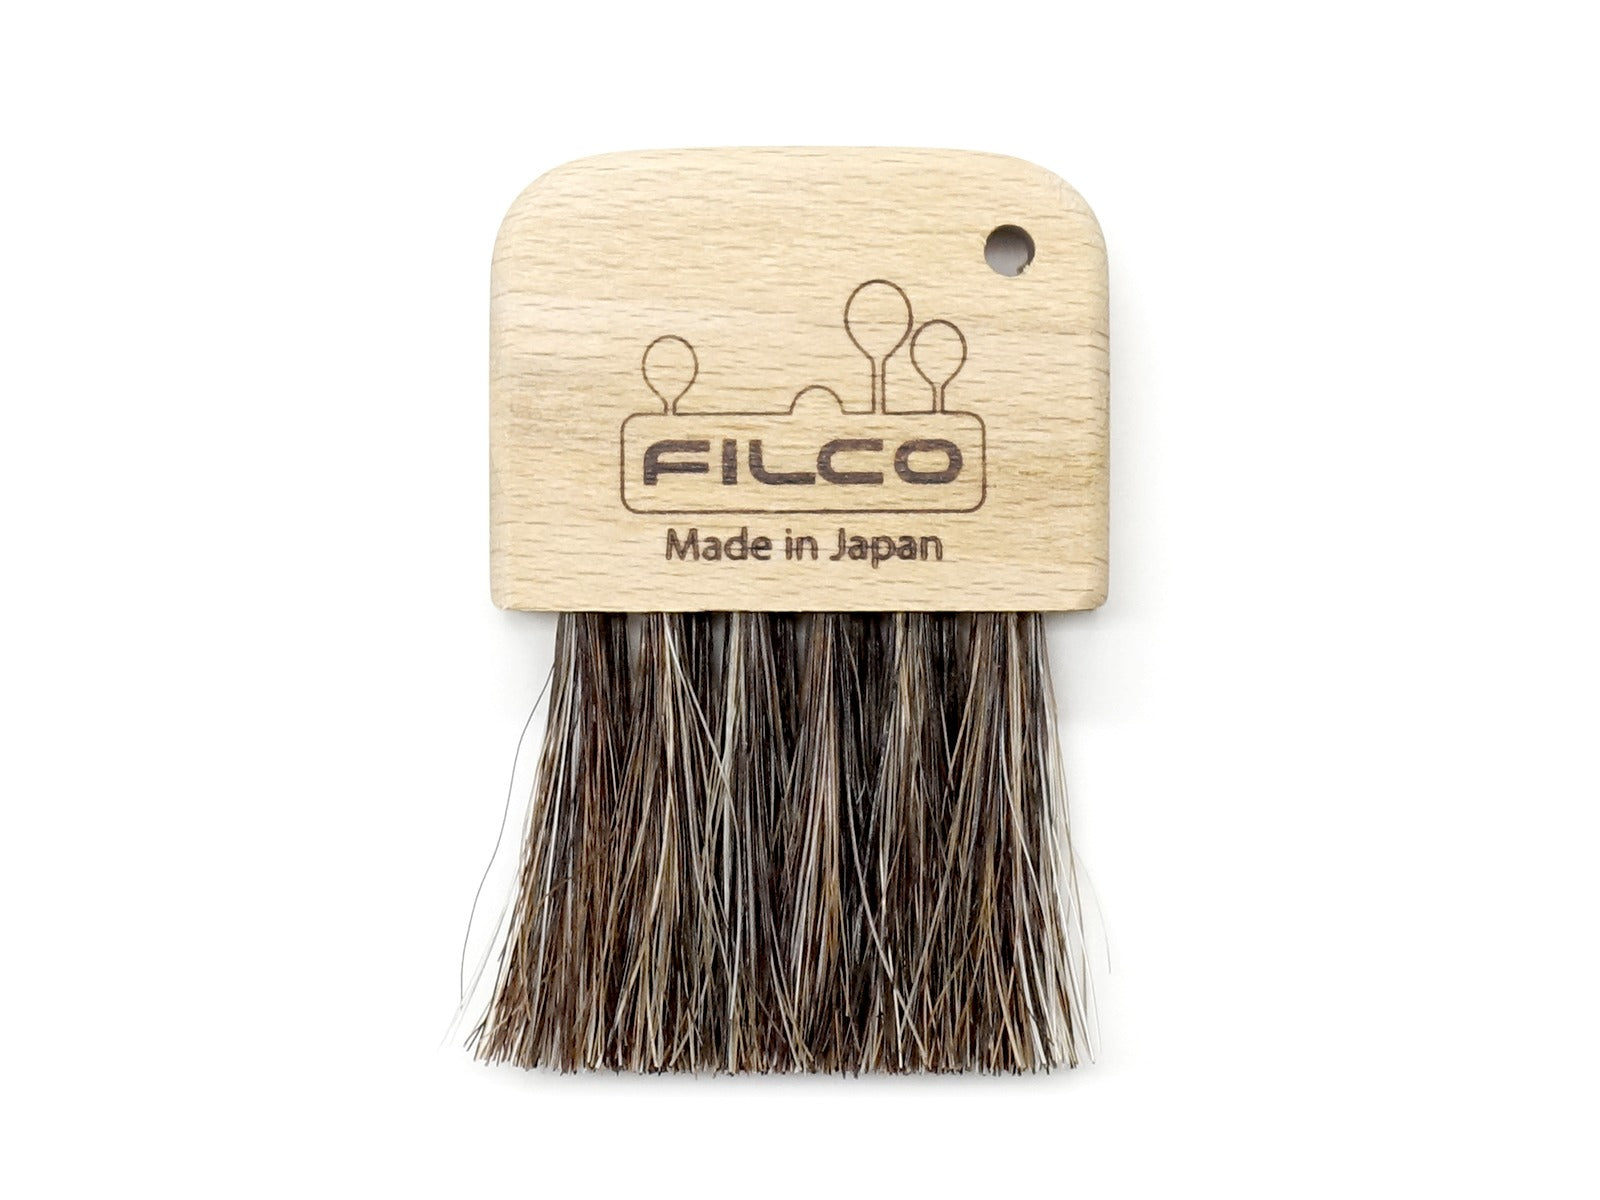 Filco Horsehair Cleaning Brush for Keyboard MK9L3049LT |42104|